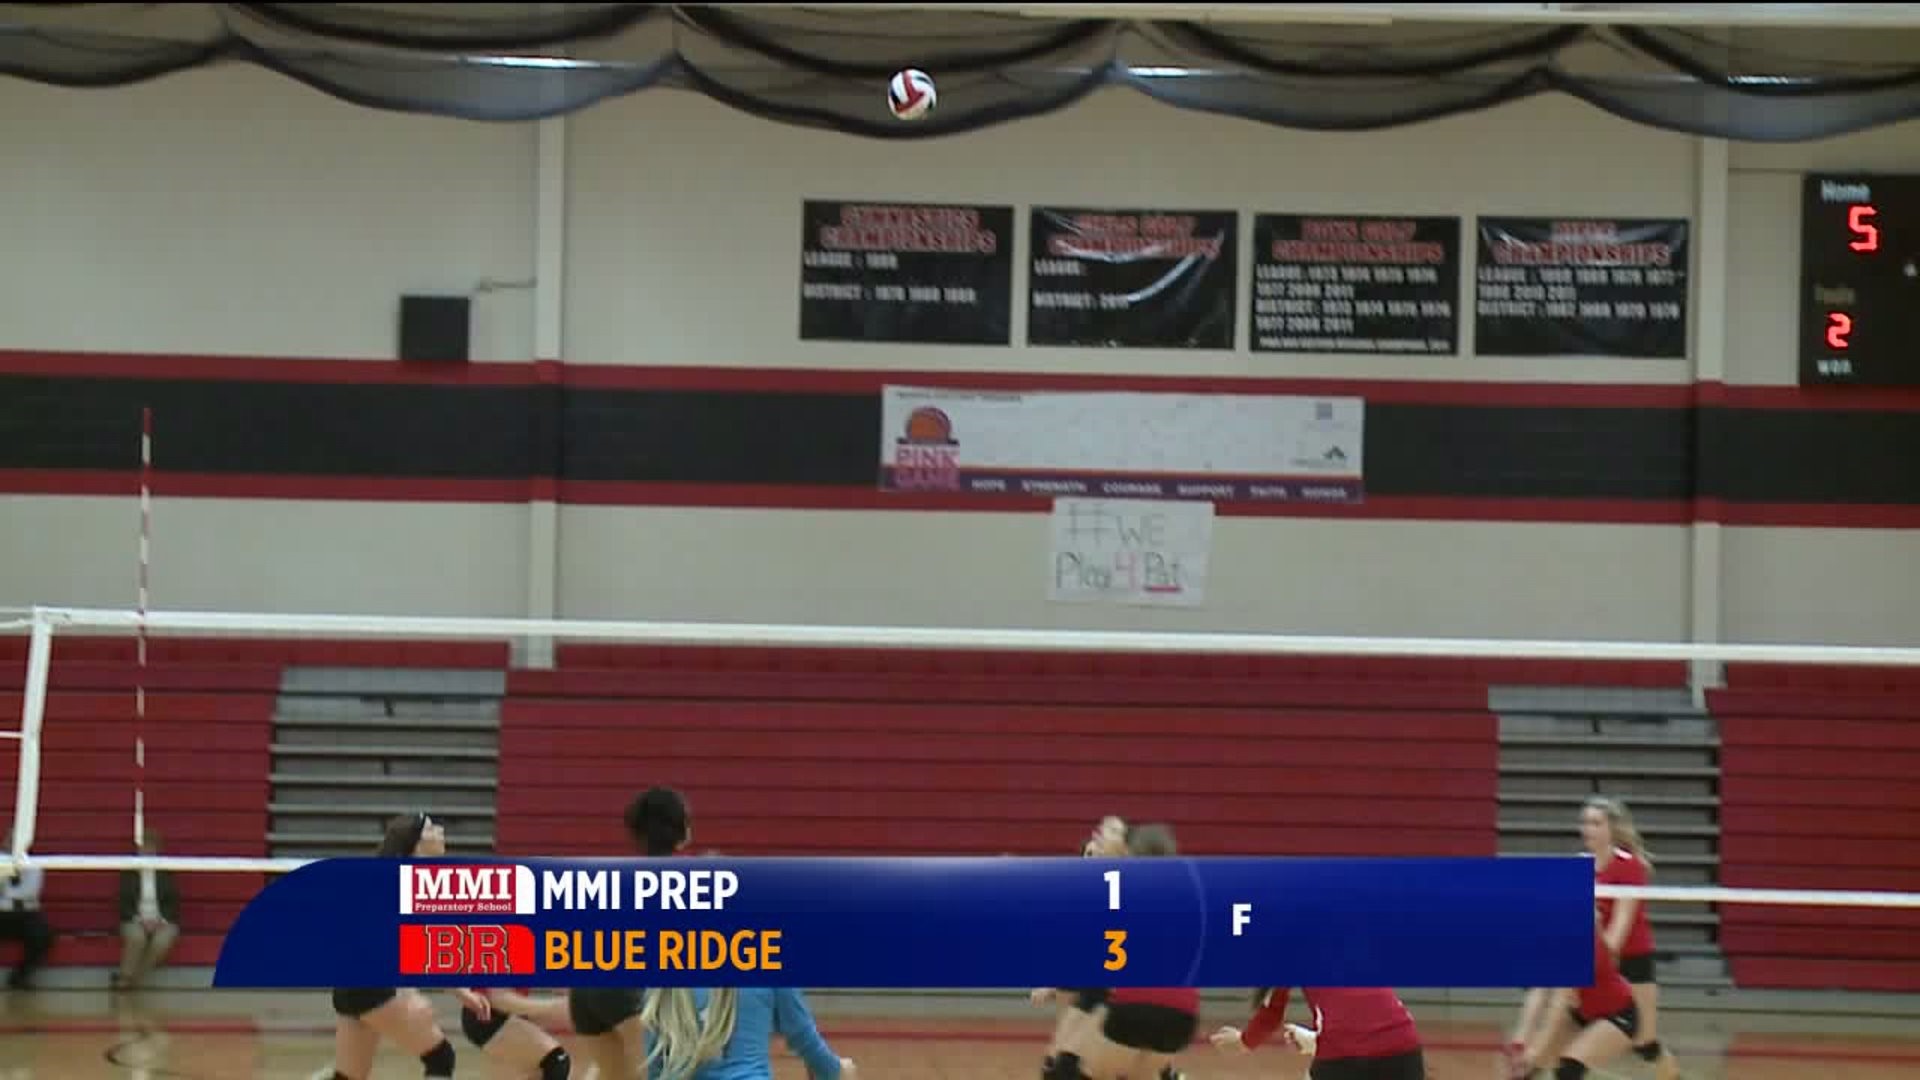 Blue Ridge MMI Prep girls volleyball